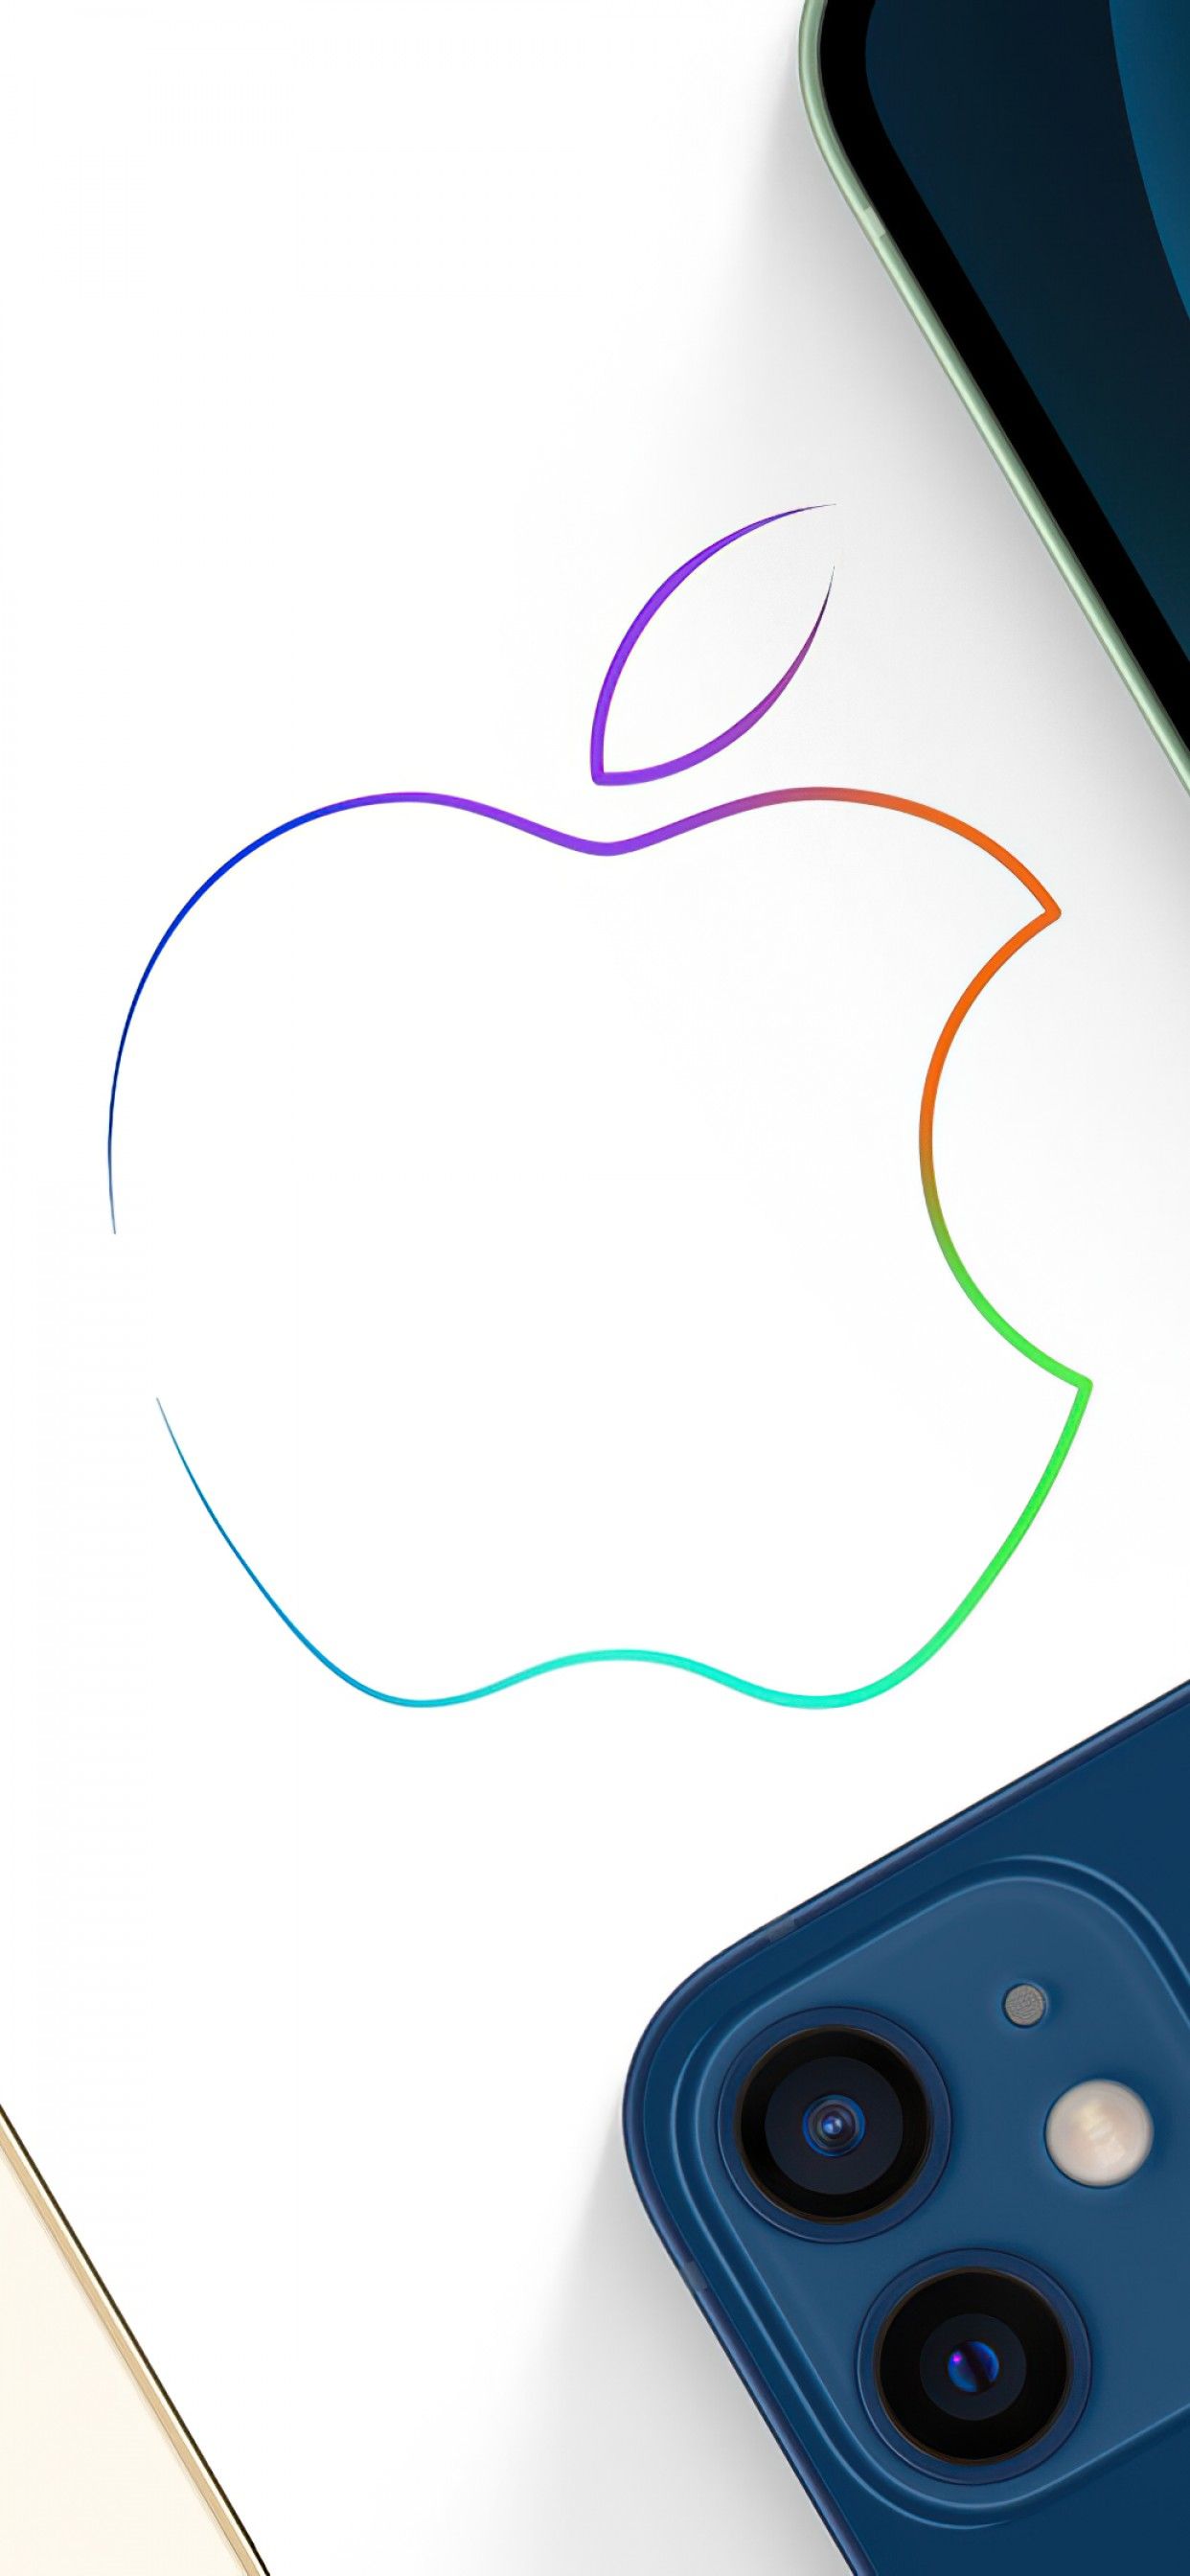 Apple logo 4K Wallpaper, iPhone 12 .4kwallpaper.com